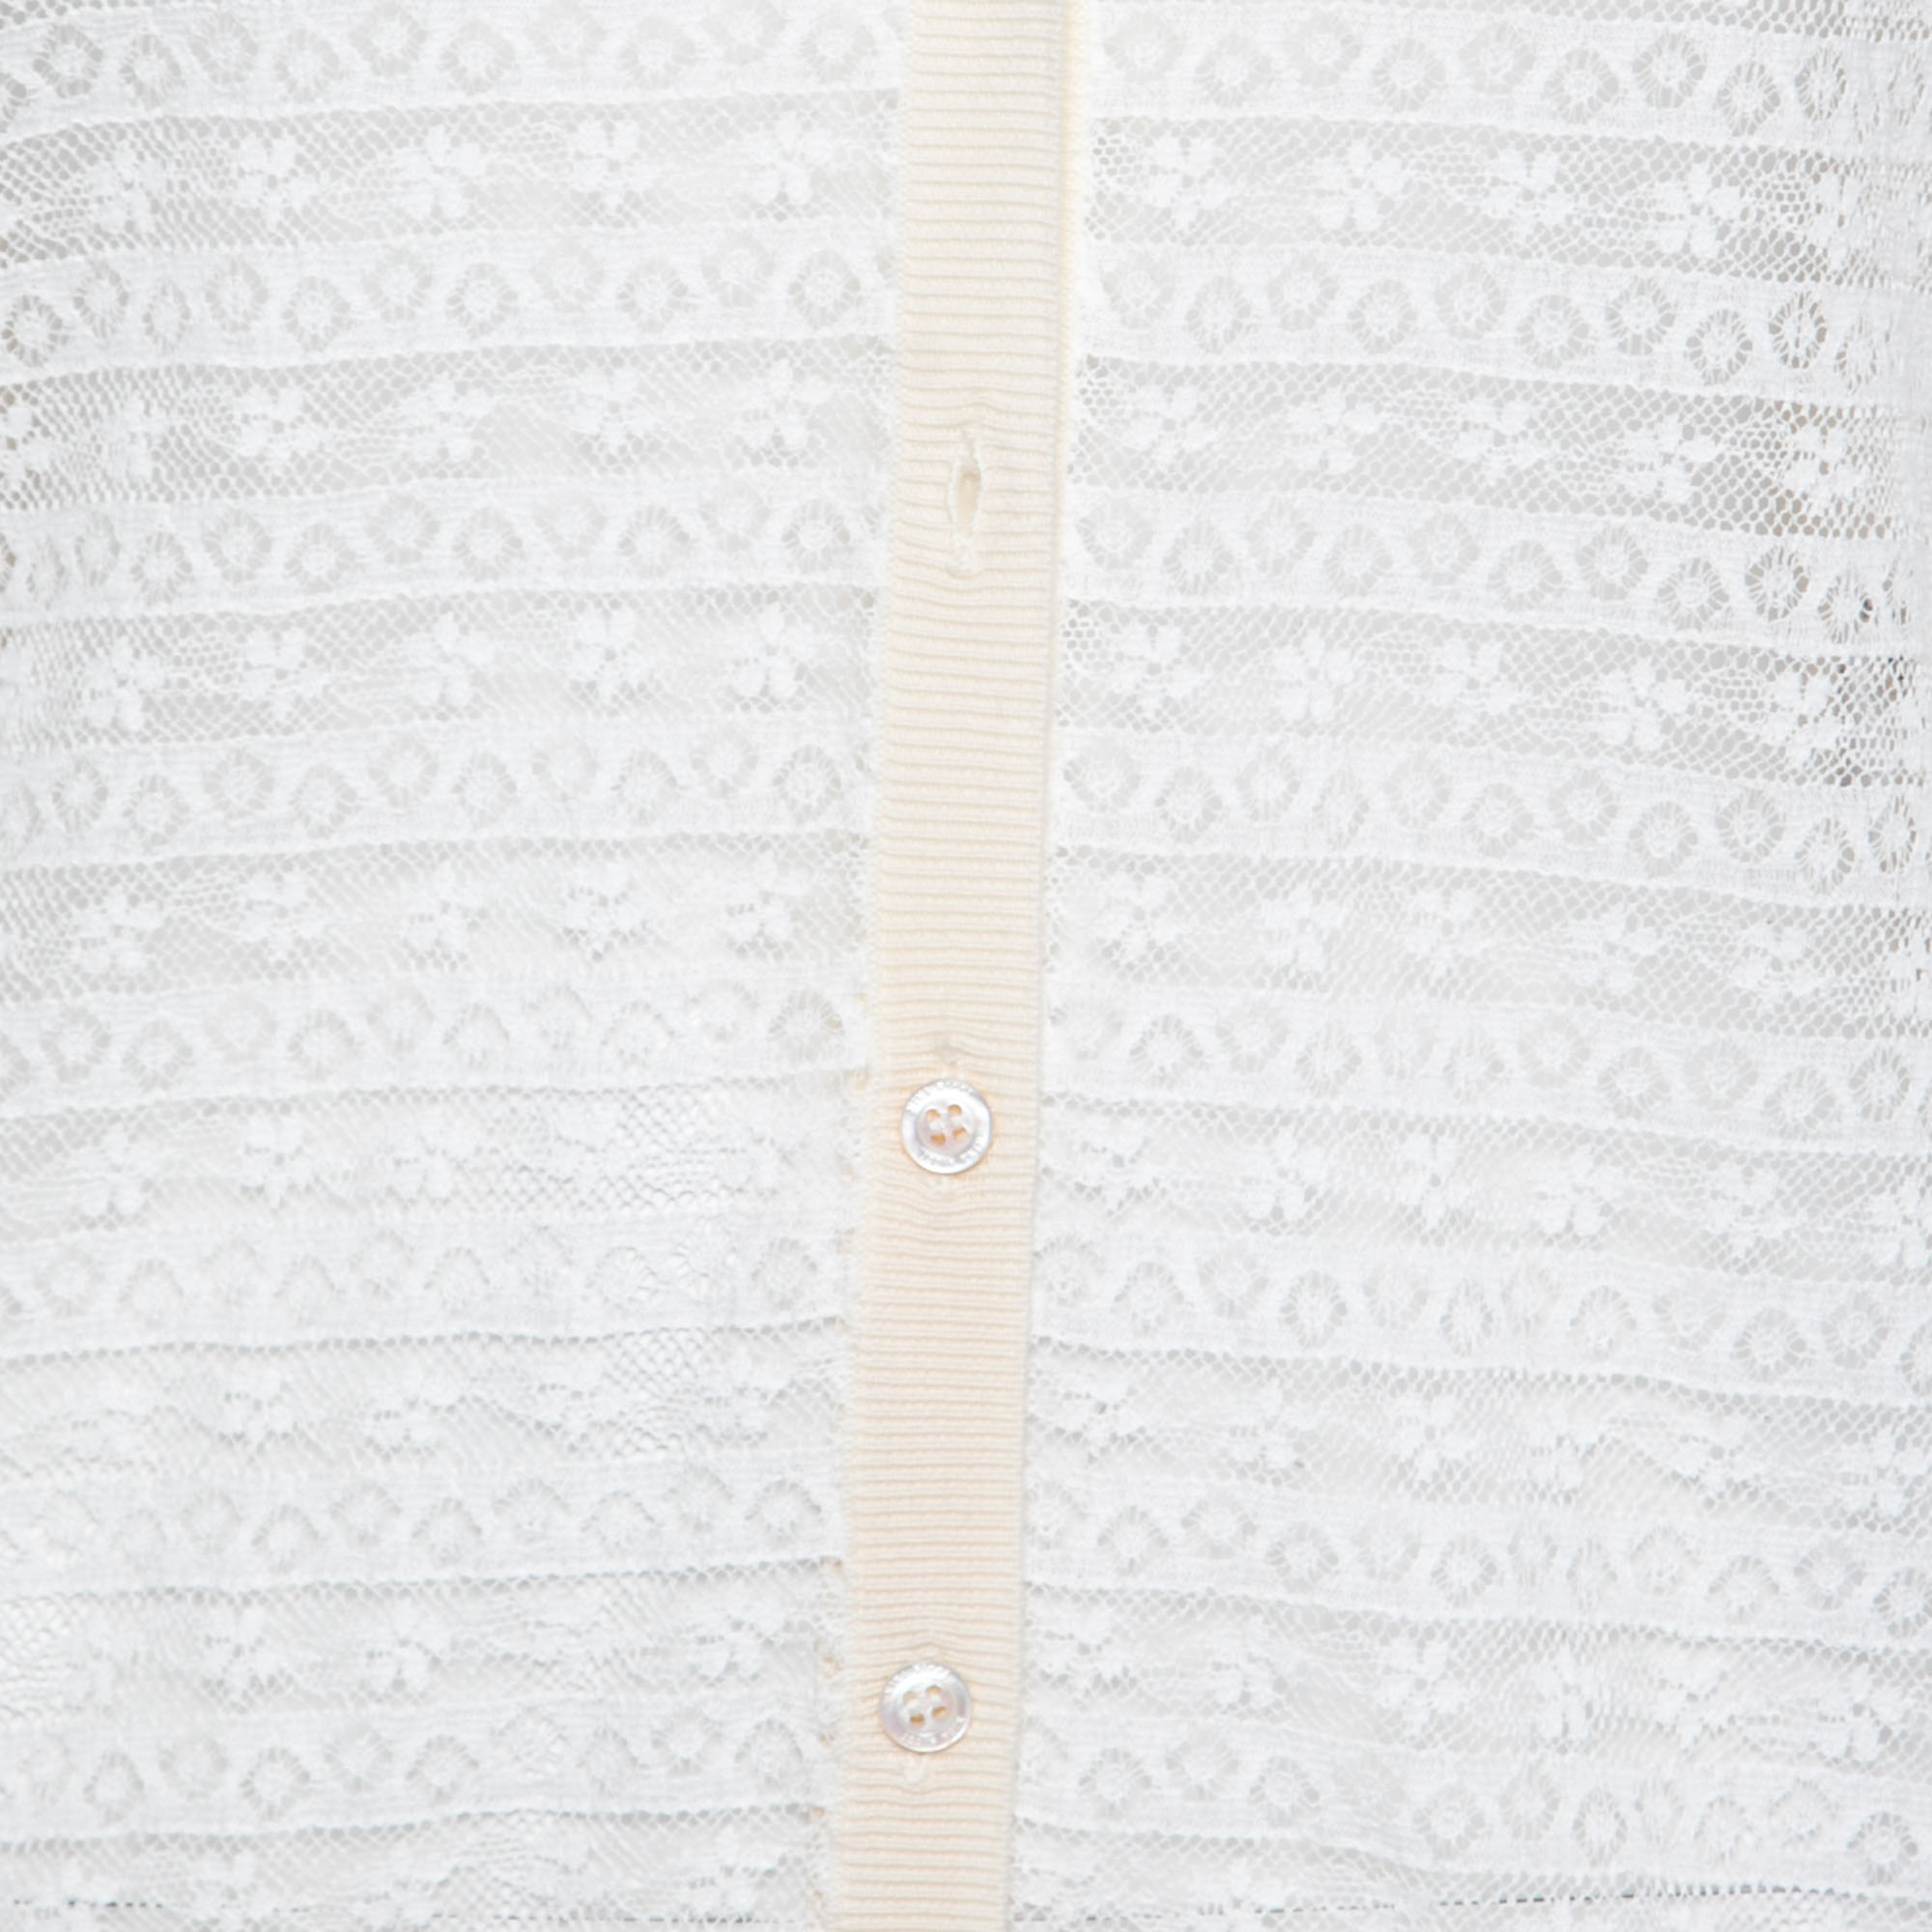 Nina Ricci Cream Striped Knit And Lace Cardigan XL